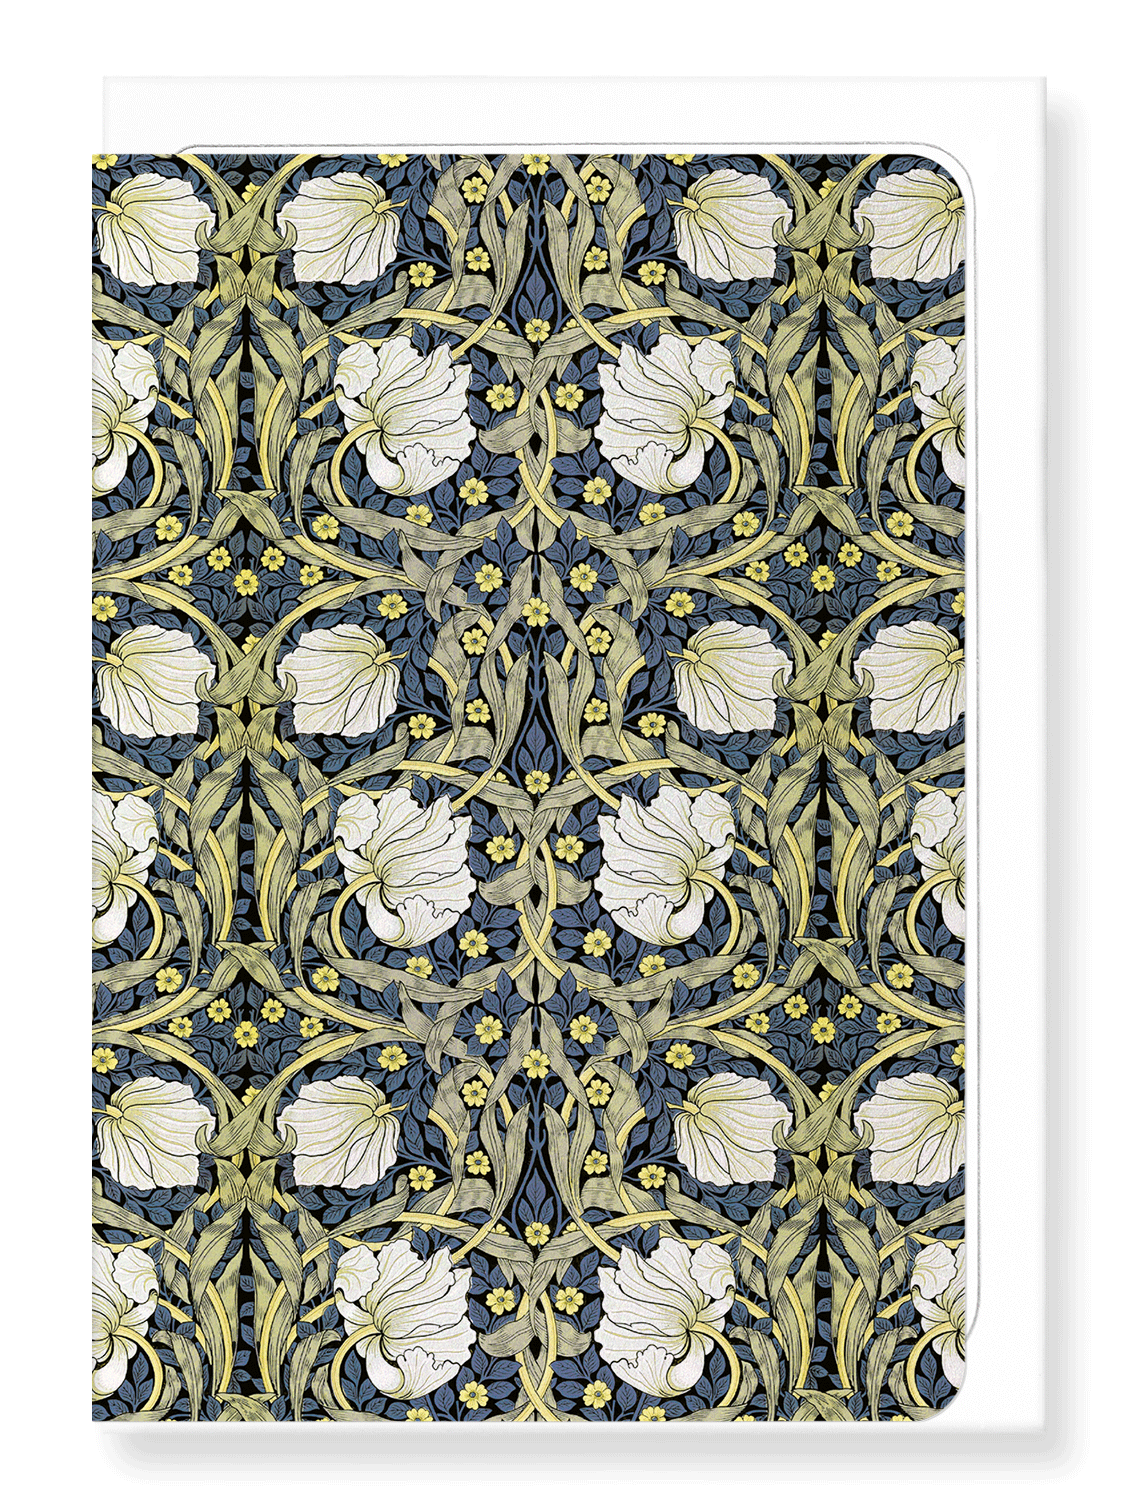 Ezen Designs - Pimpernel flowers - Greeting Card - Front